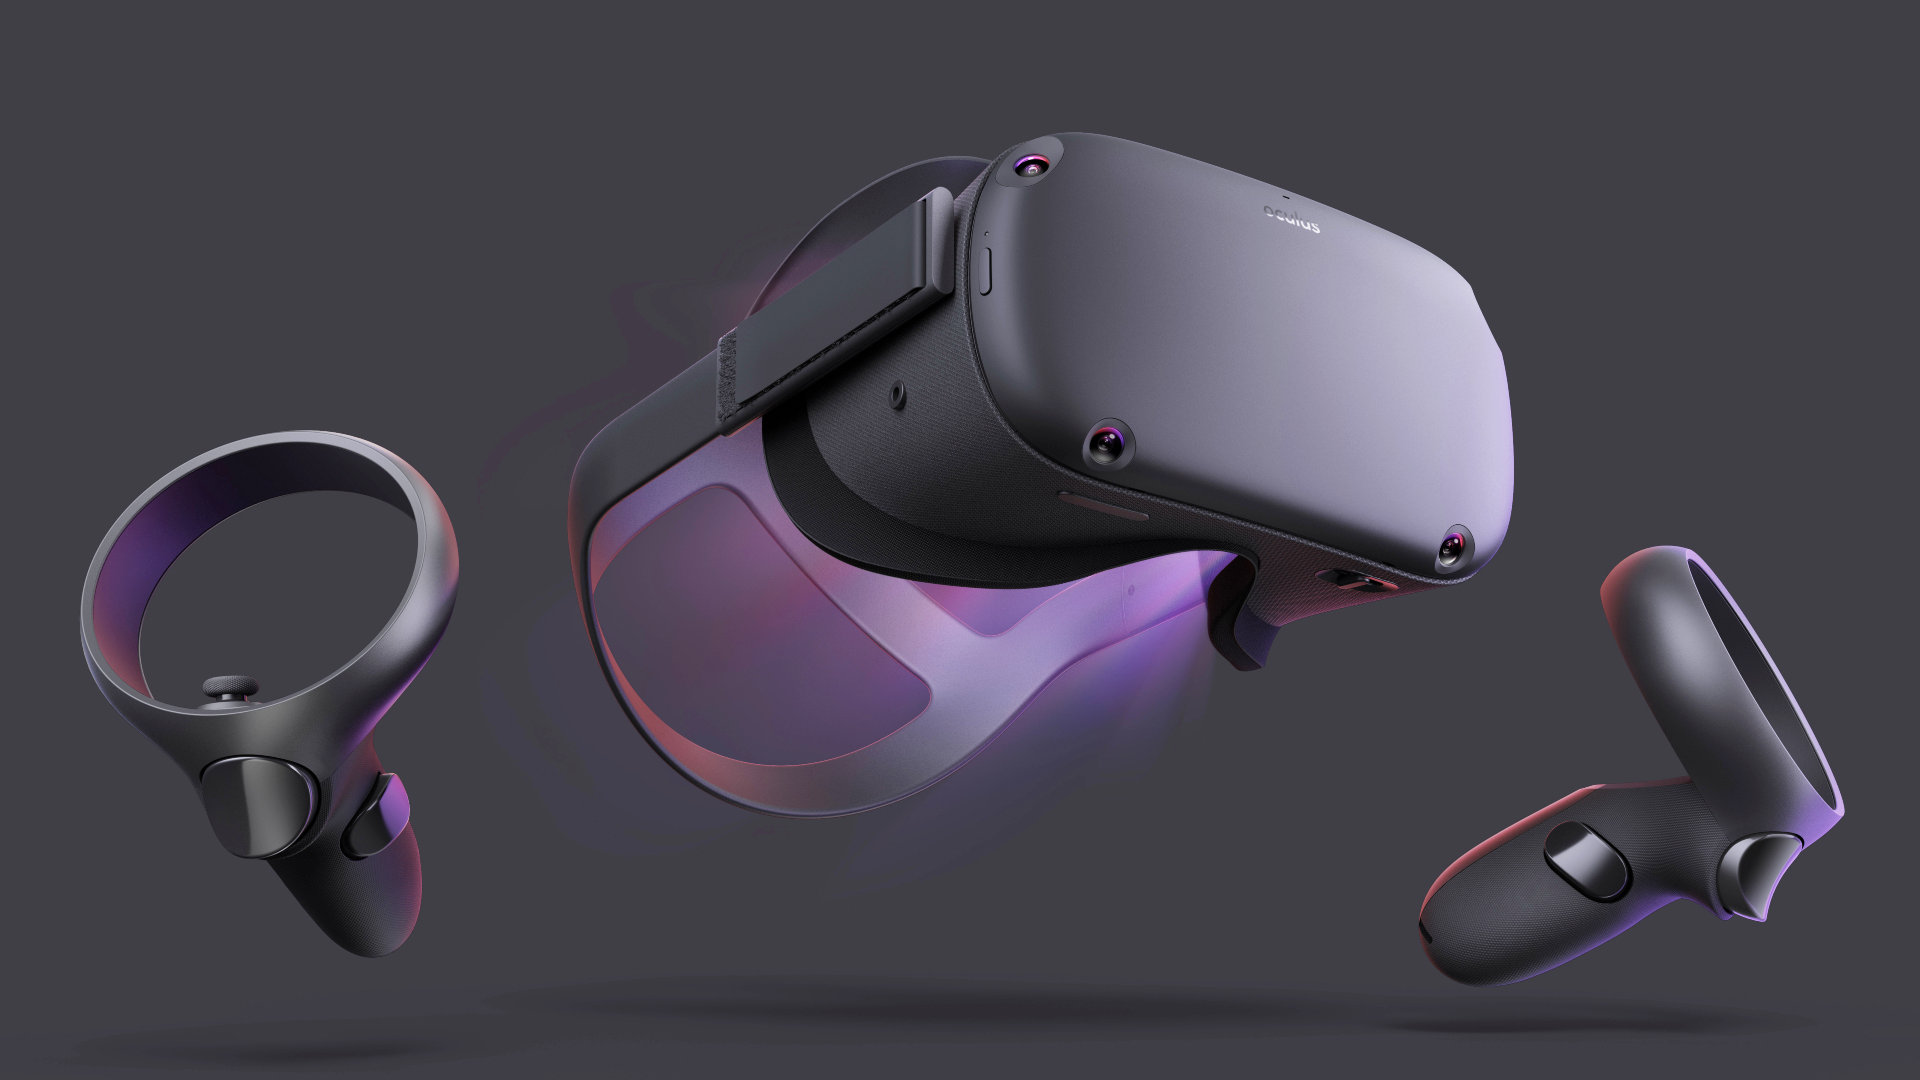 Original Oculus VR headset will get Meta Quest 2 hand tracking 2.0